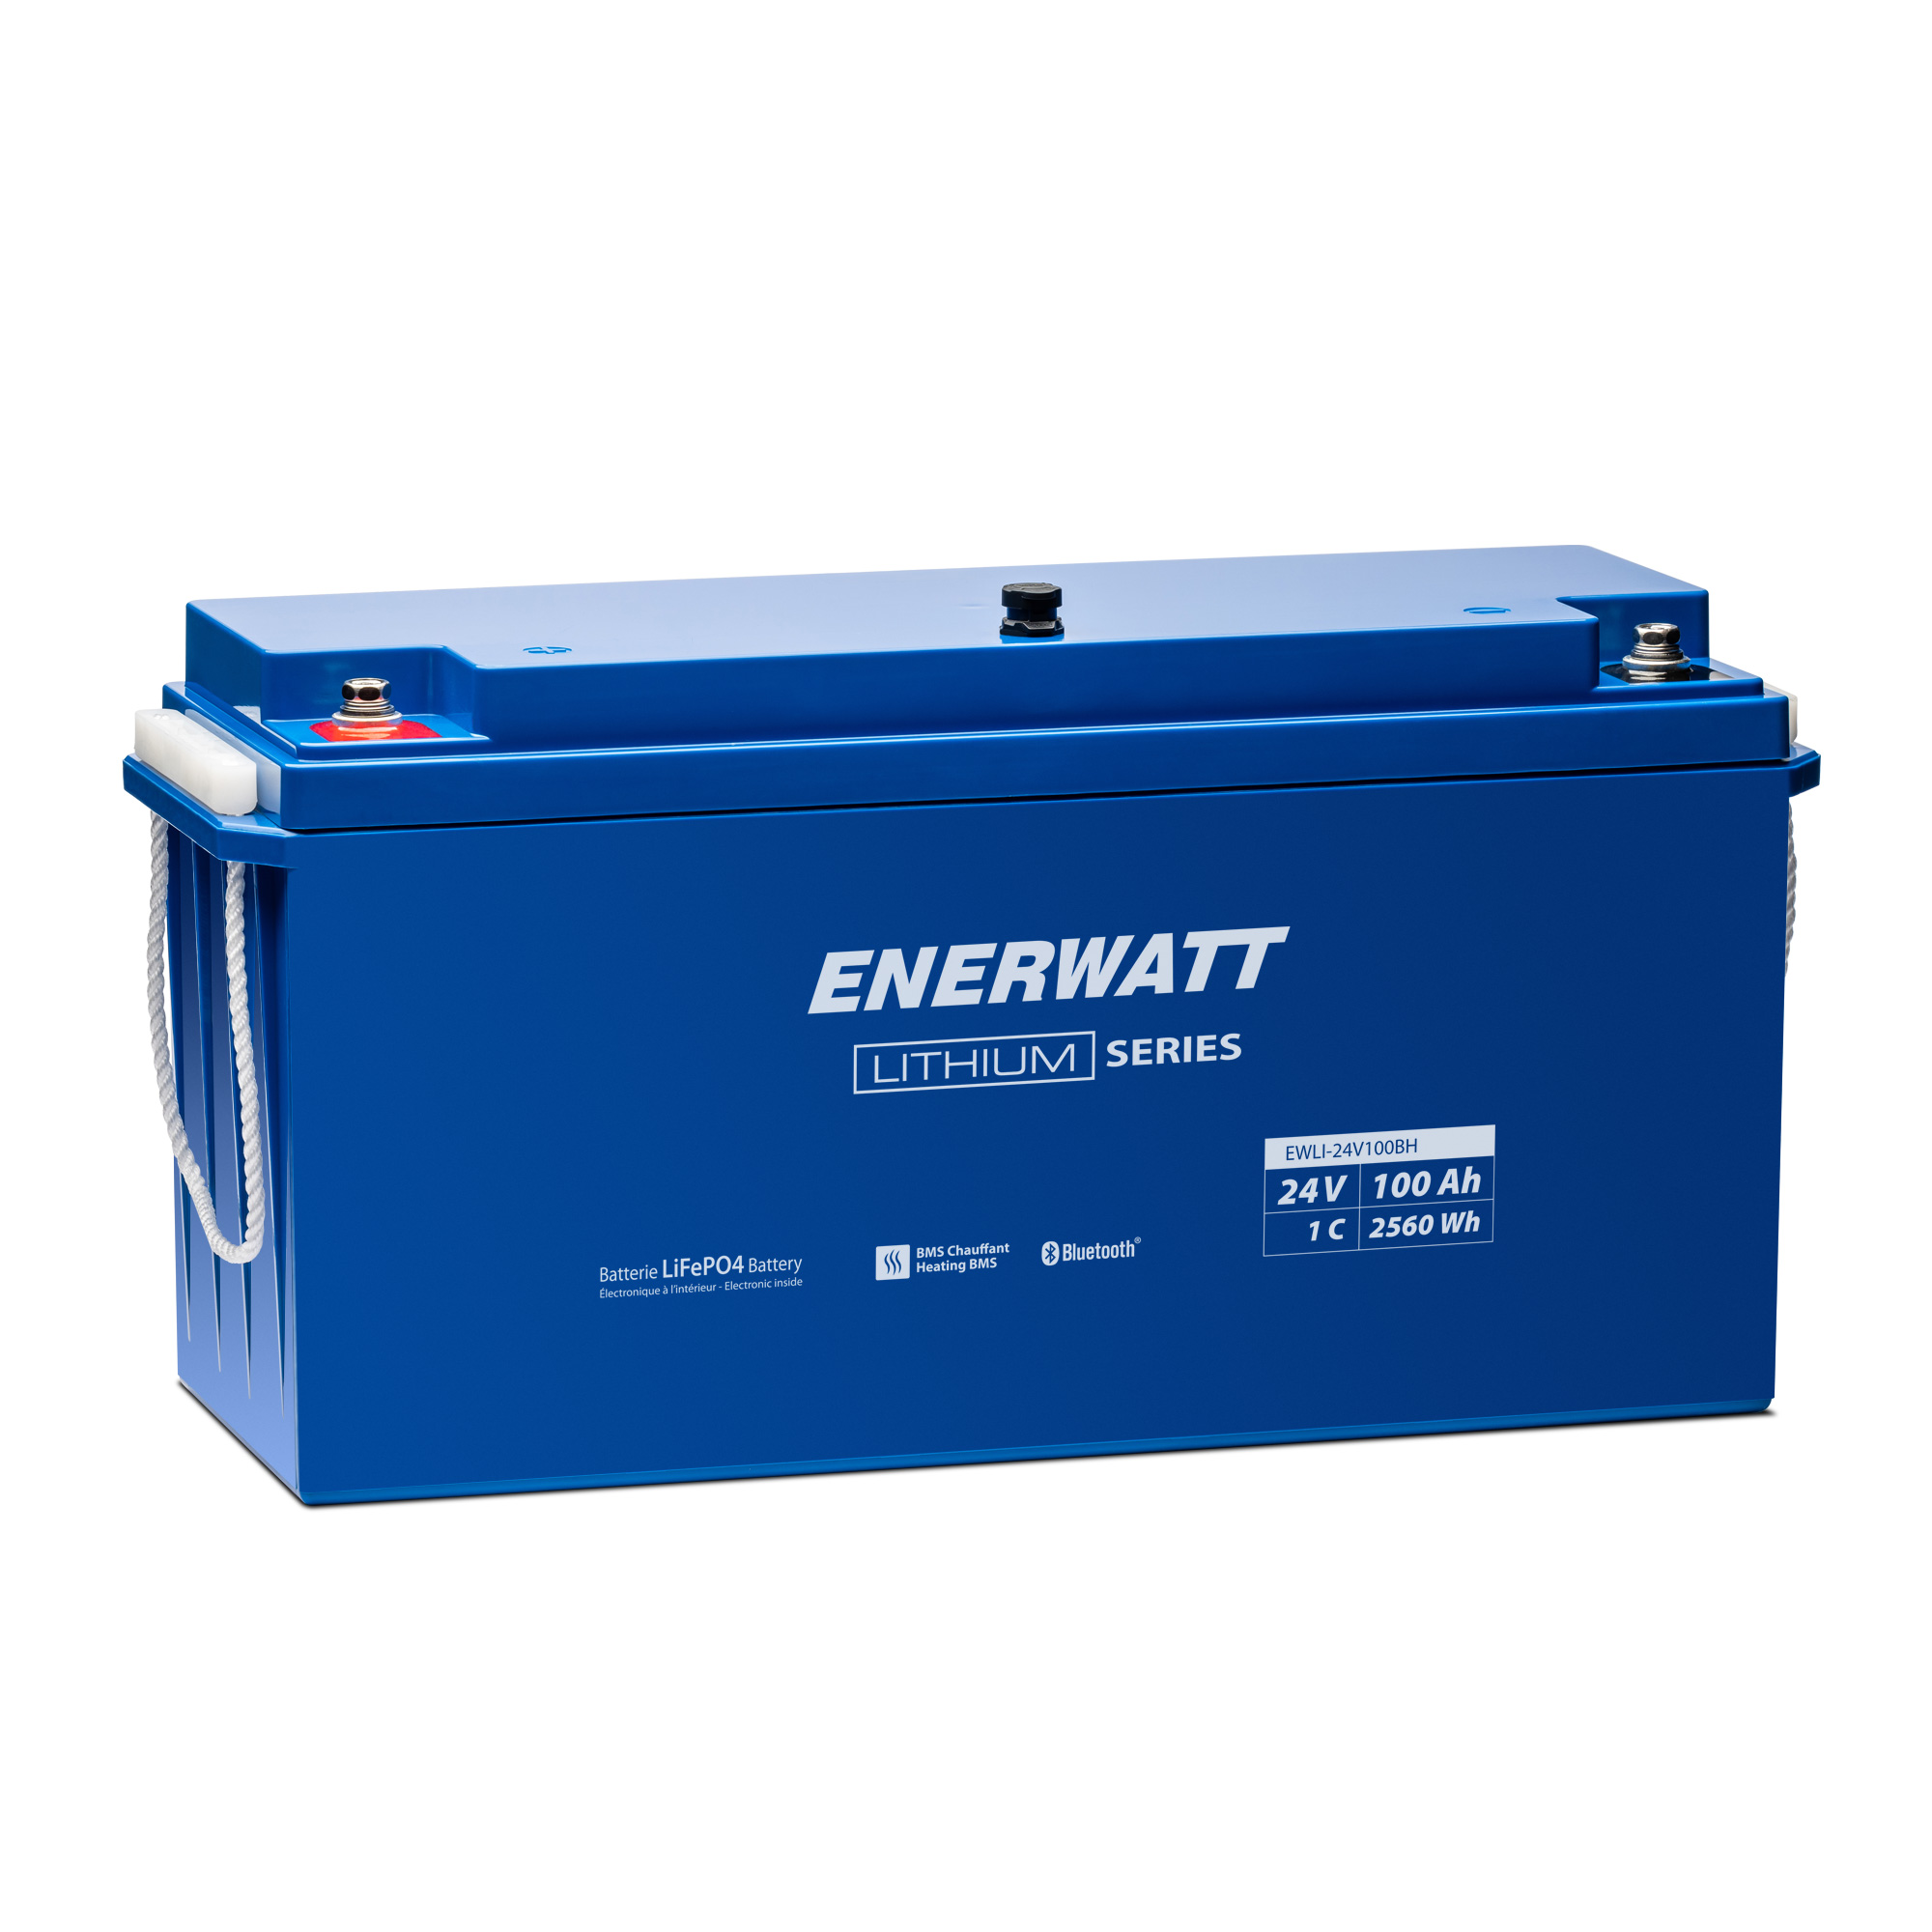 EWLI-24V100BH LiFePO4 Battery GR N120 24V 100Ah 1C Bluetooth and Heated  Batteries Expert